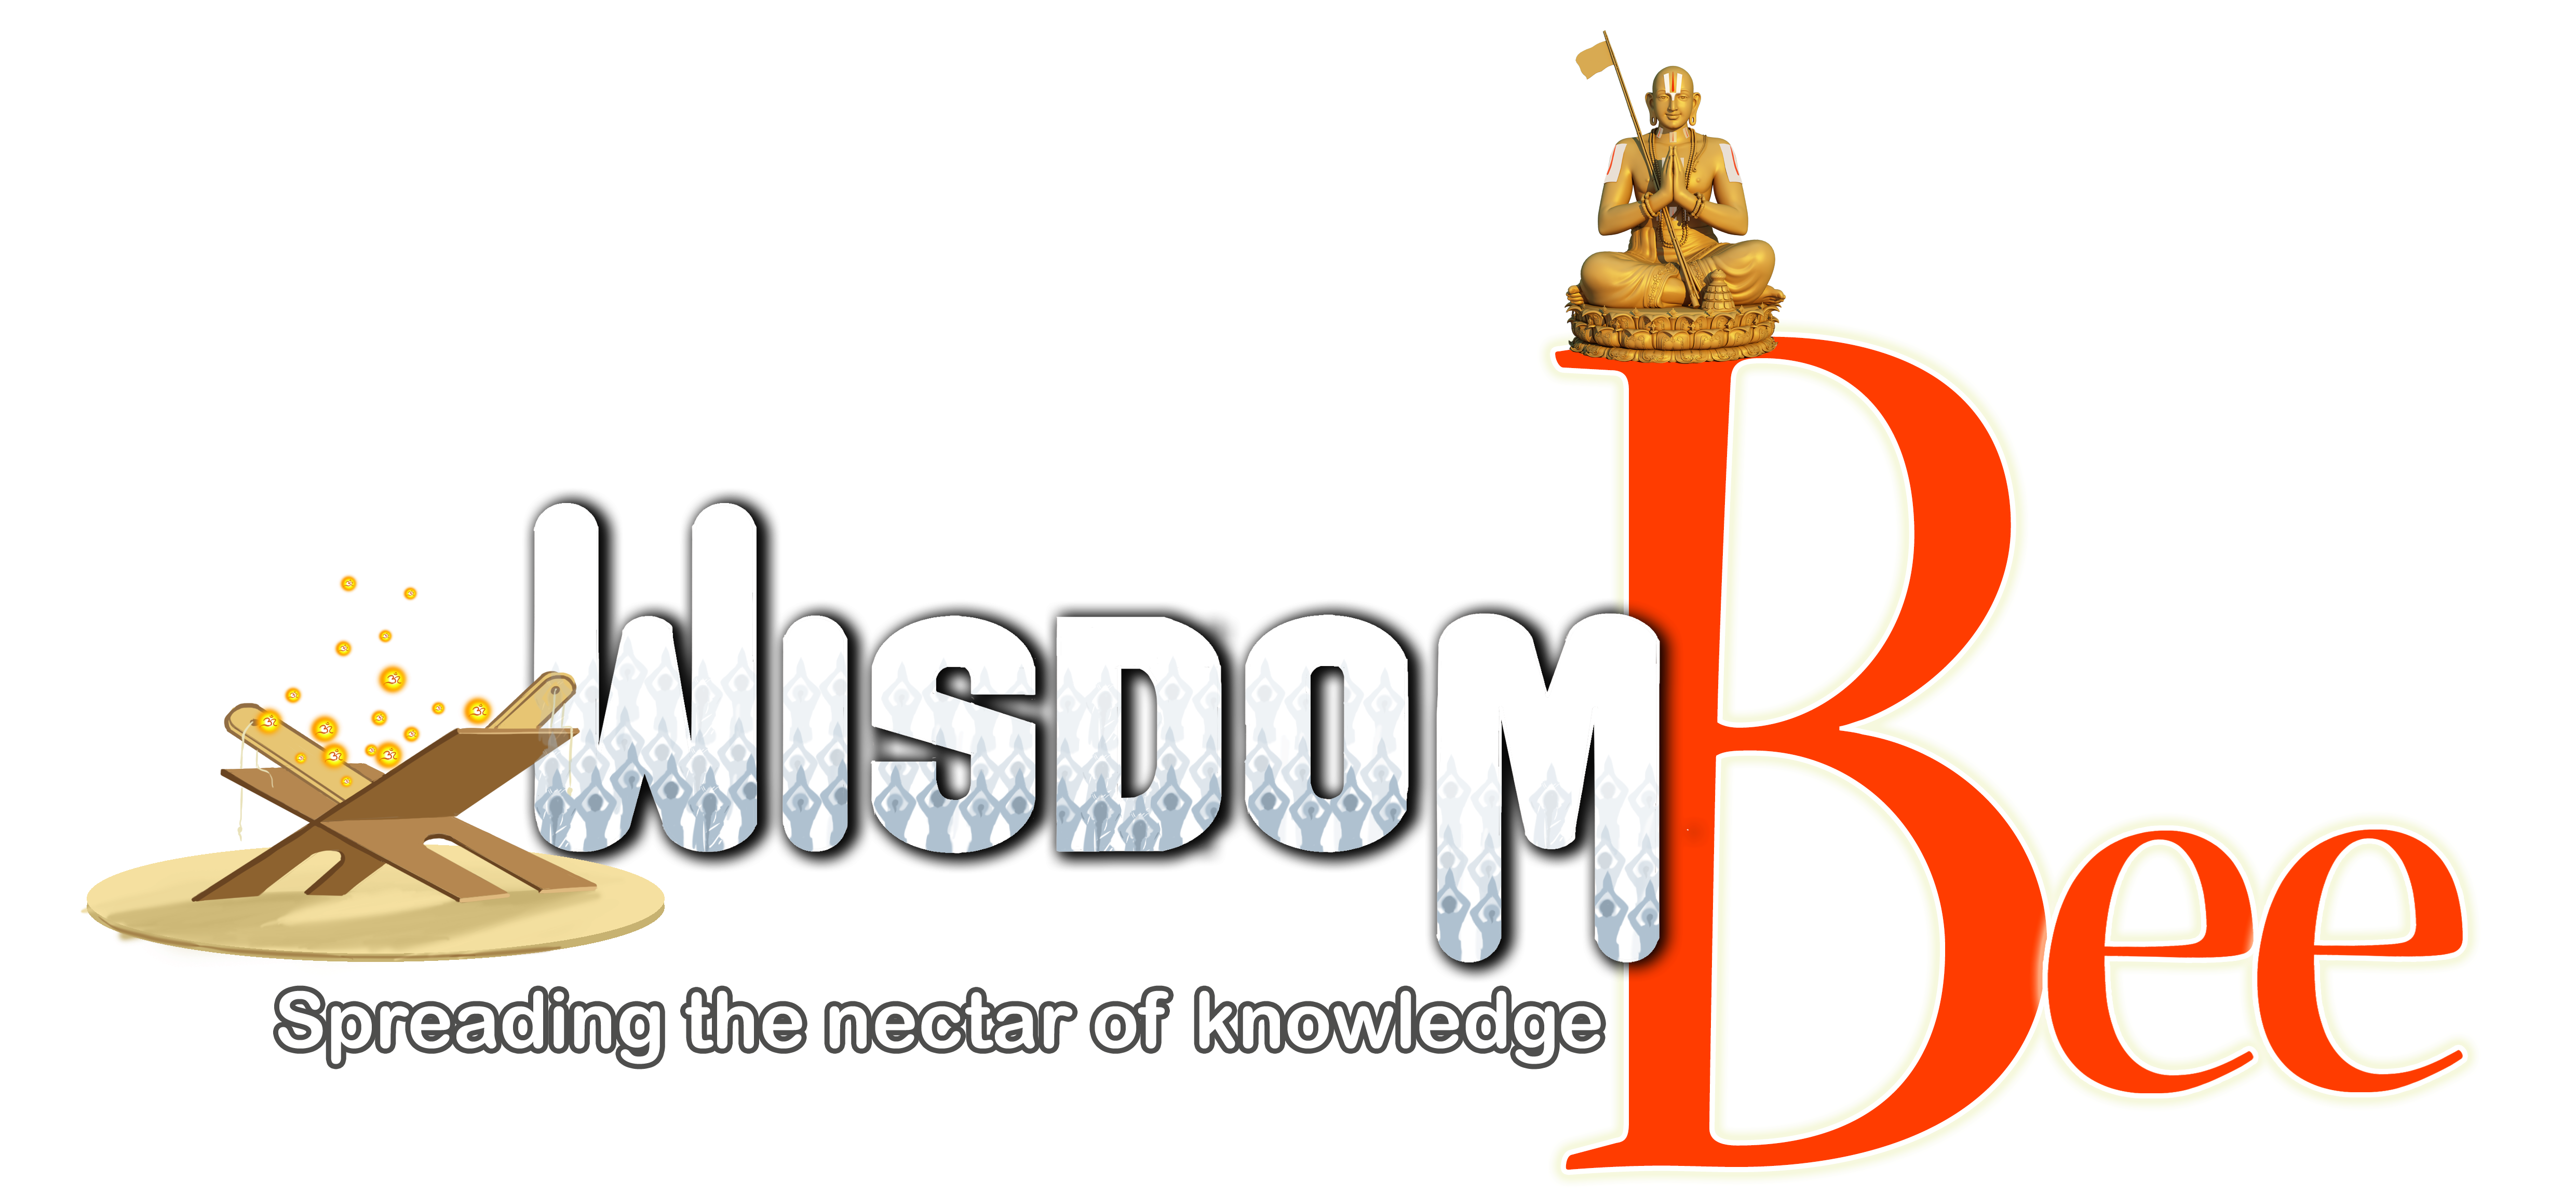 wisdom_Bee